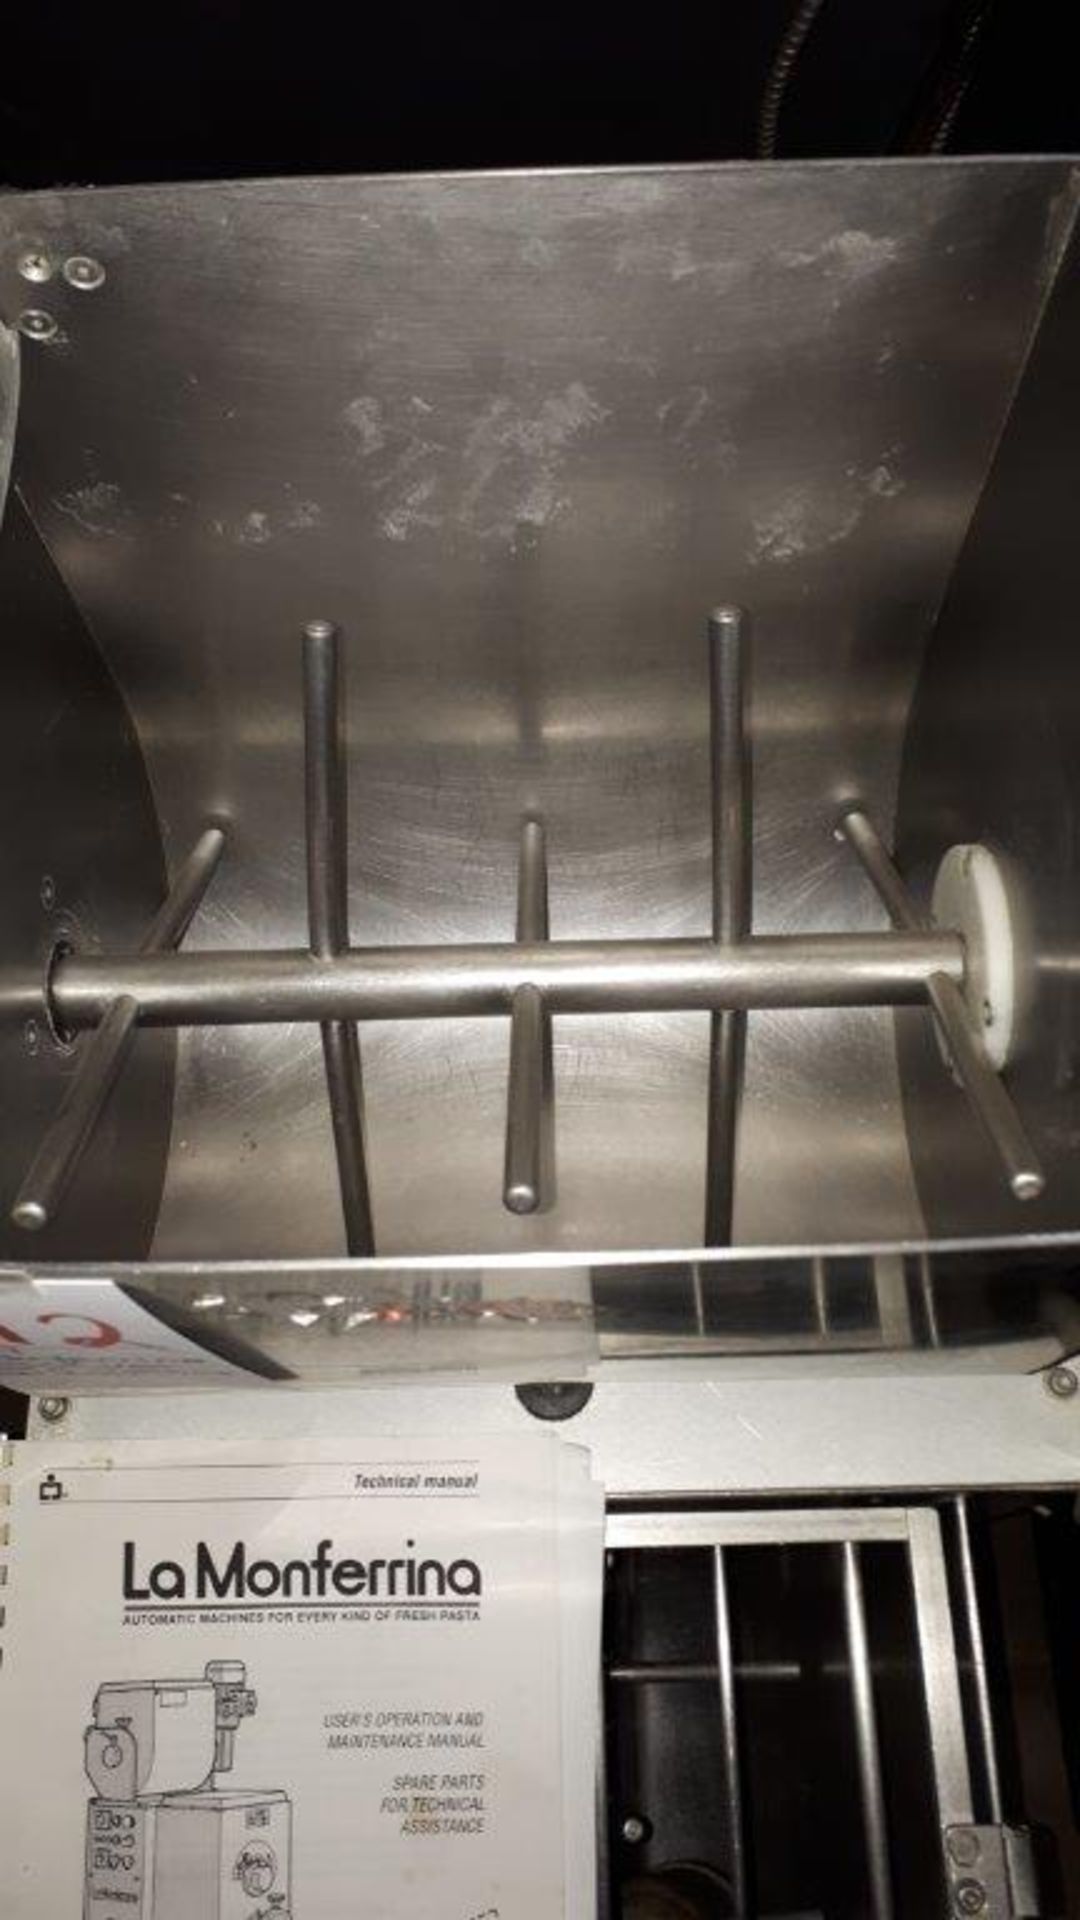 La Monferrina double vat pasta machine, year 2003 - Image 3 of 5